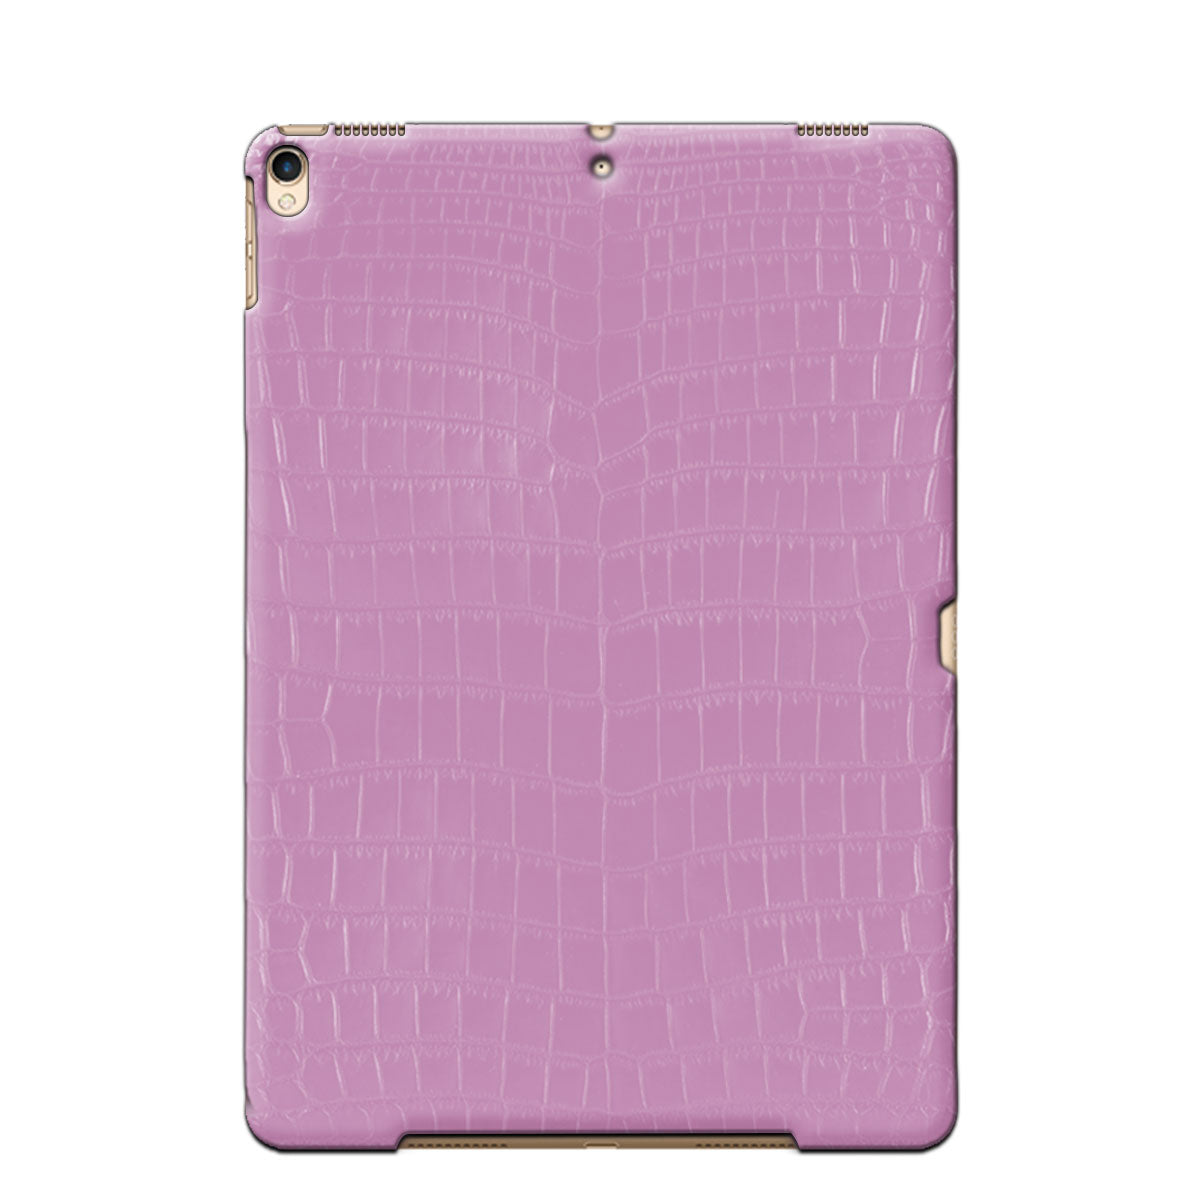 Need It Now: Smythson's iPad Cases